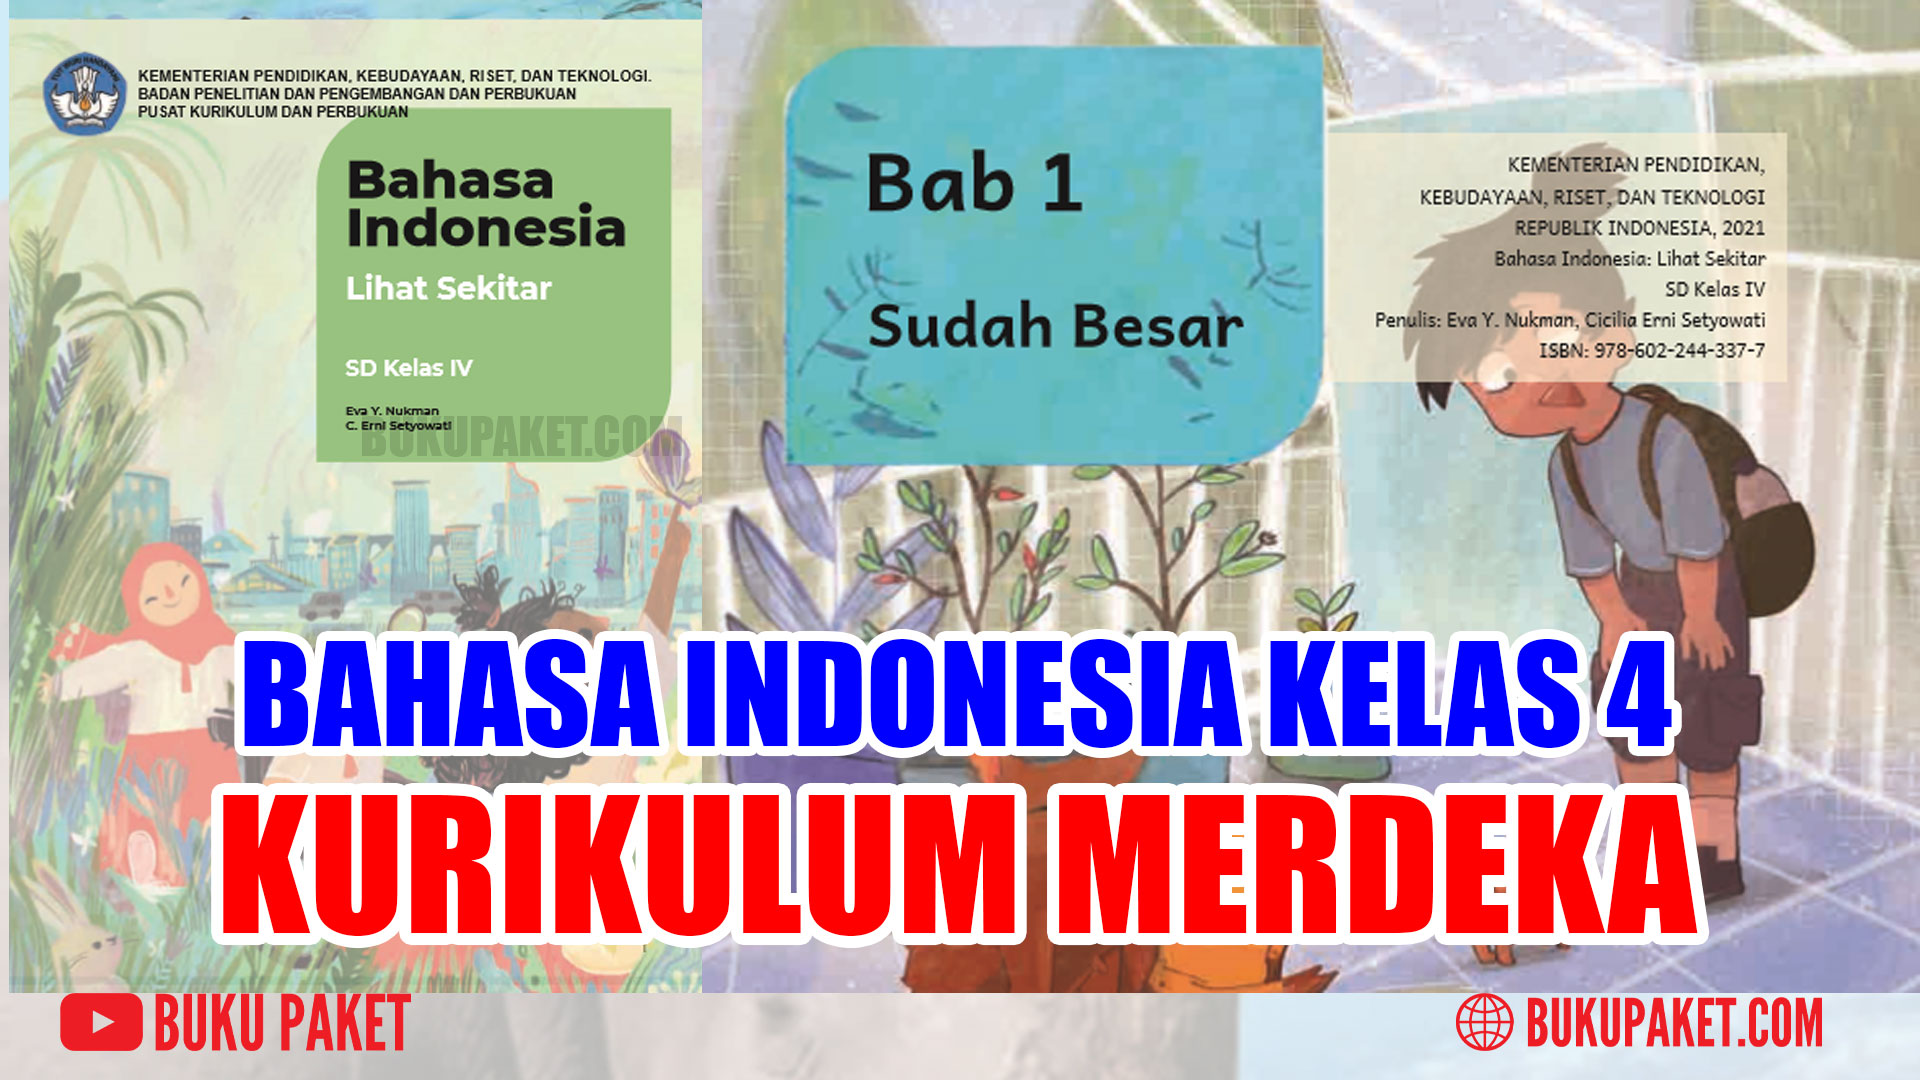 Bahasa Indonesia Kelas 4 Kurikulum Merdeka